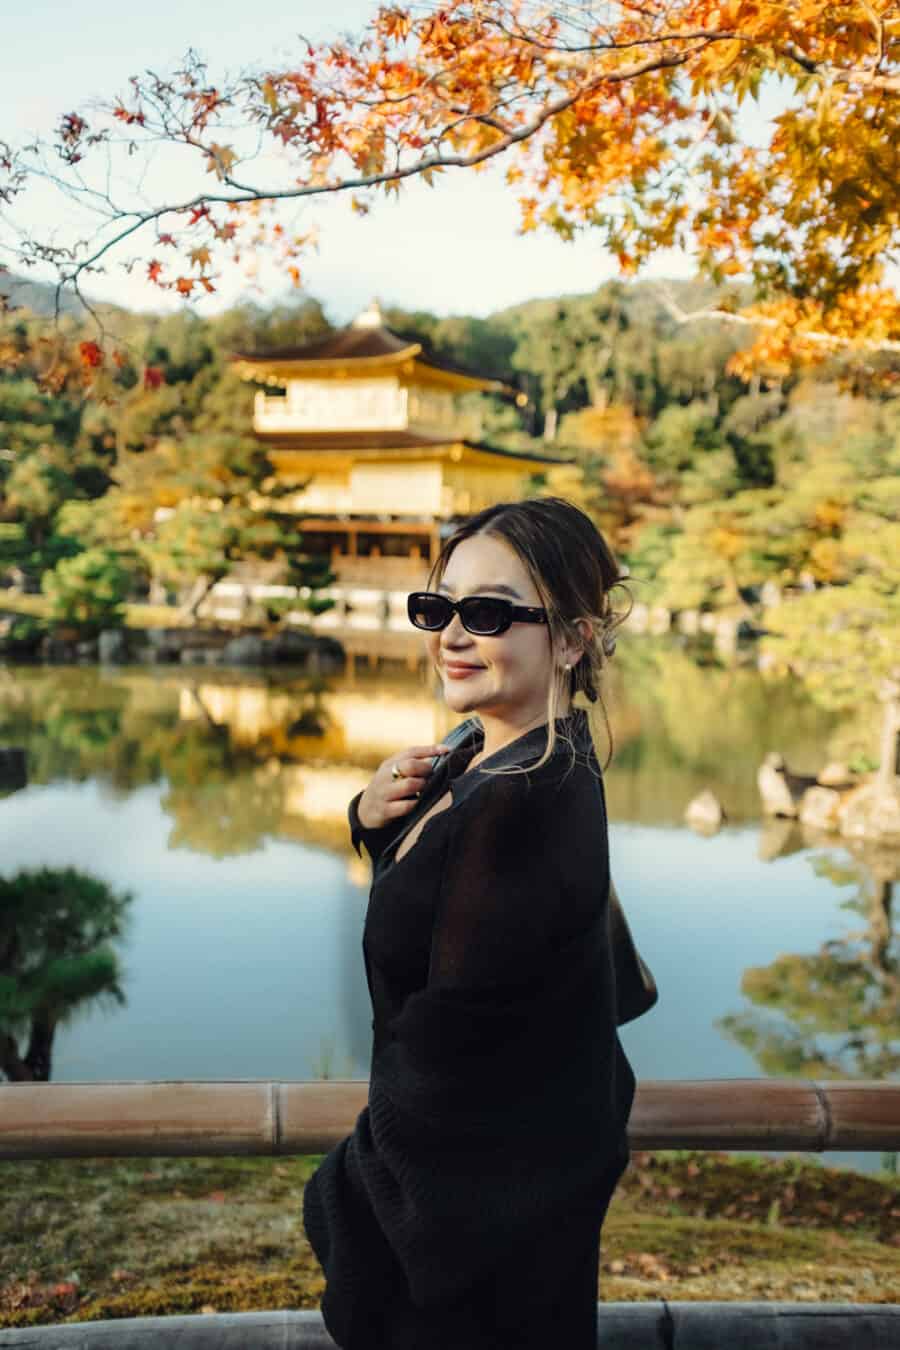 Coco Tran — Aesthetic Travel Blog By Film Photographer Coco Tran https://cocotran.com/golden-temple-kyoto-kinkakuji/